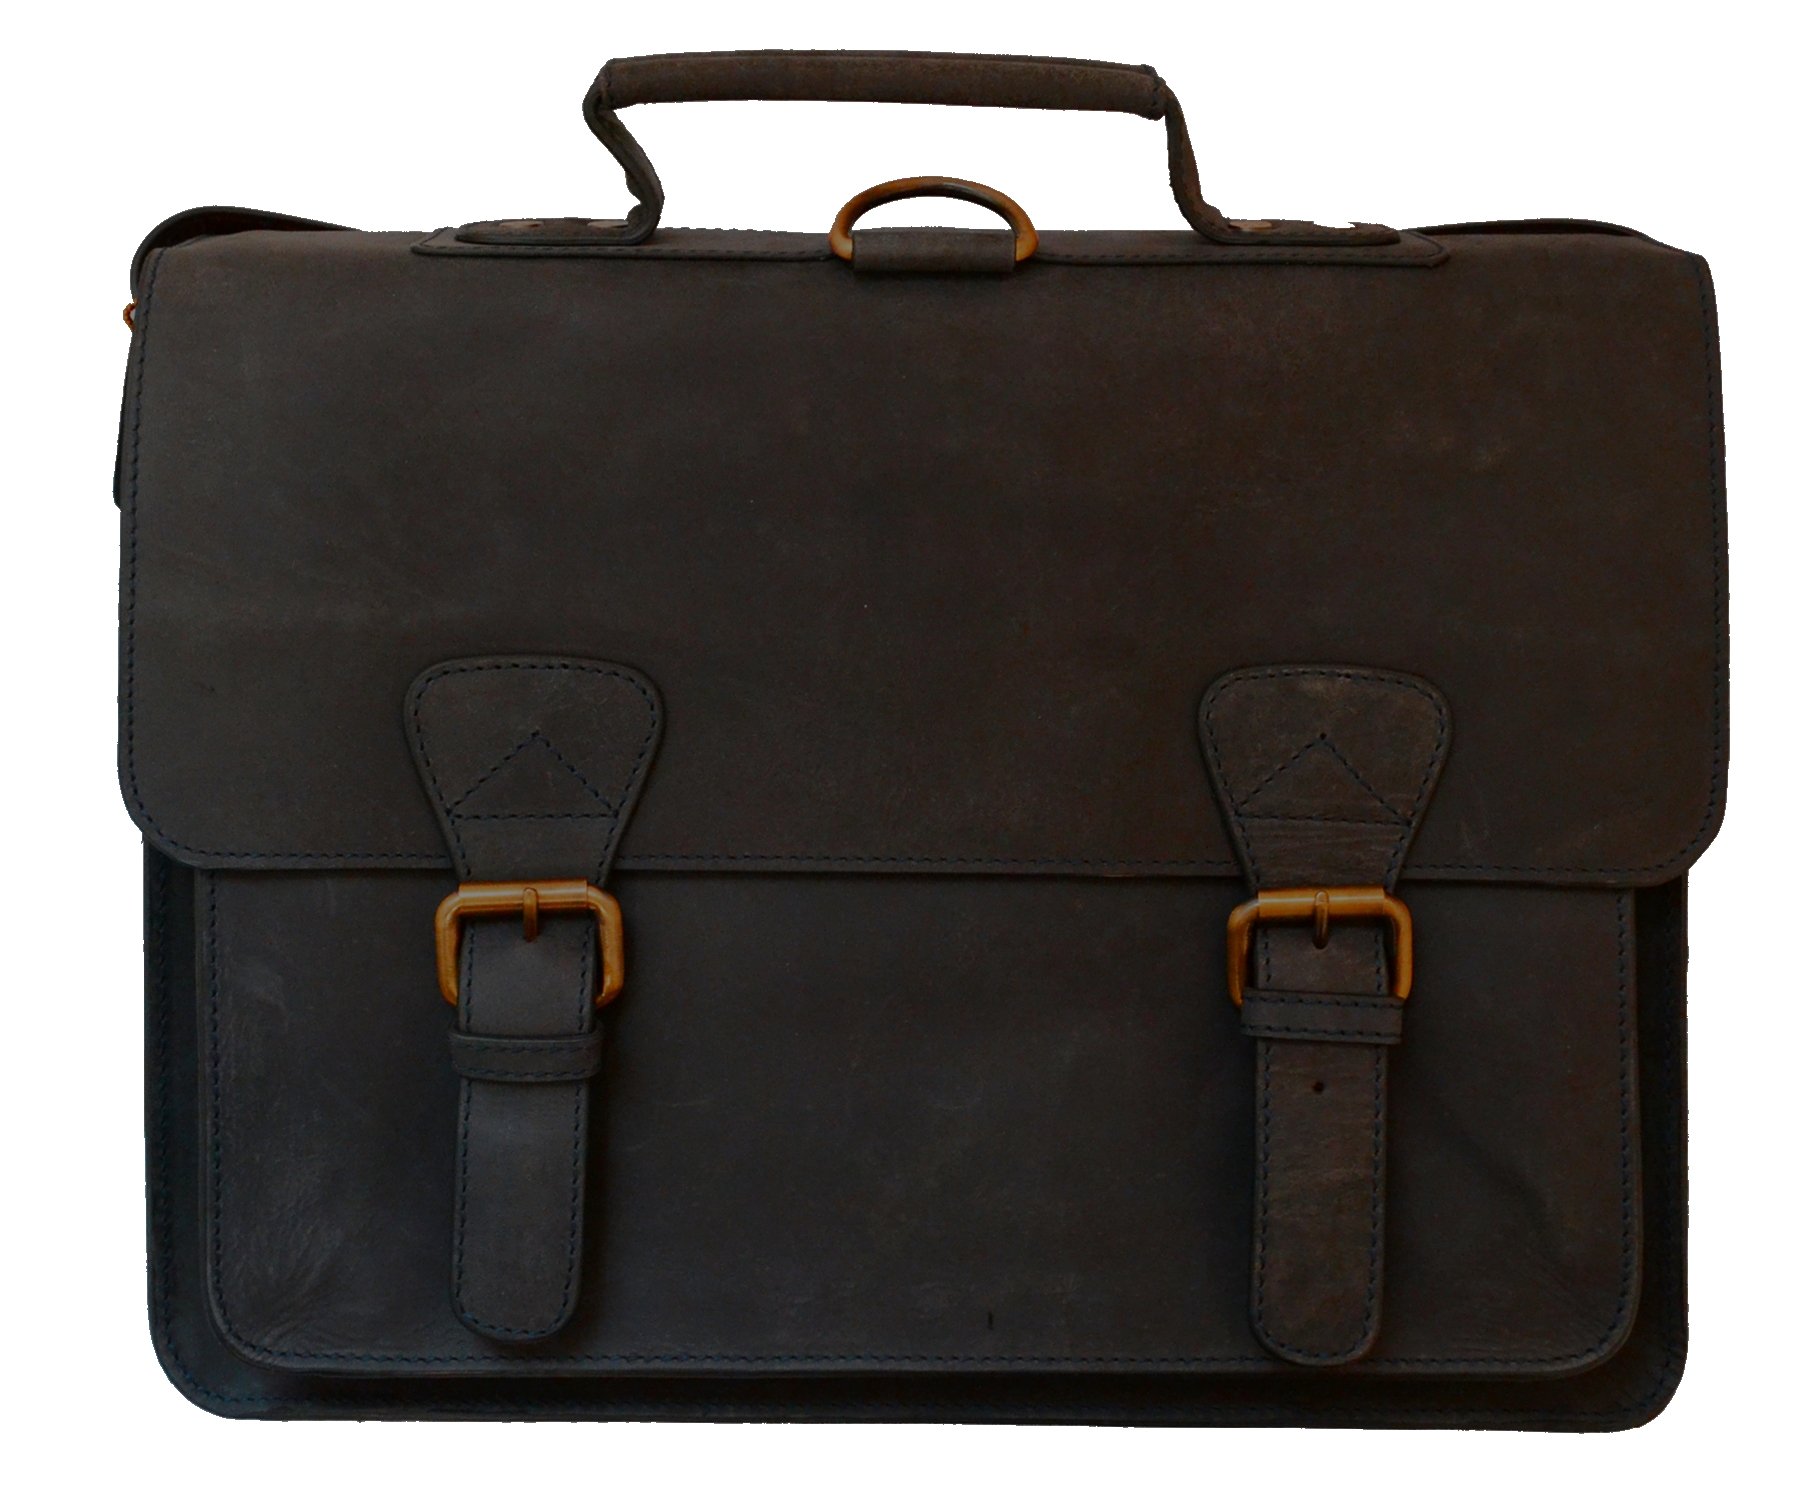 Visconti 16106 Flapover Briefcase, Brown, One Size